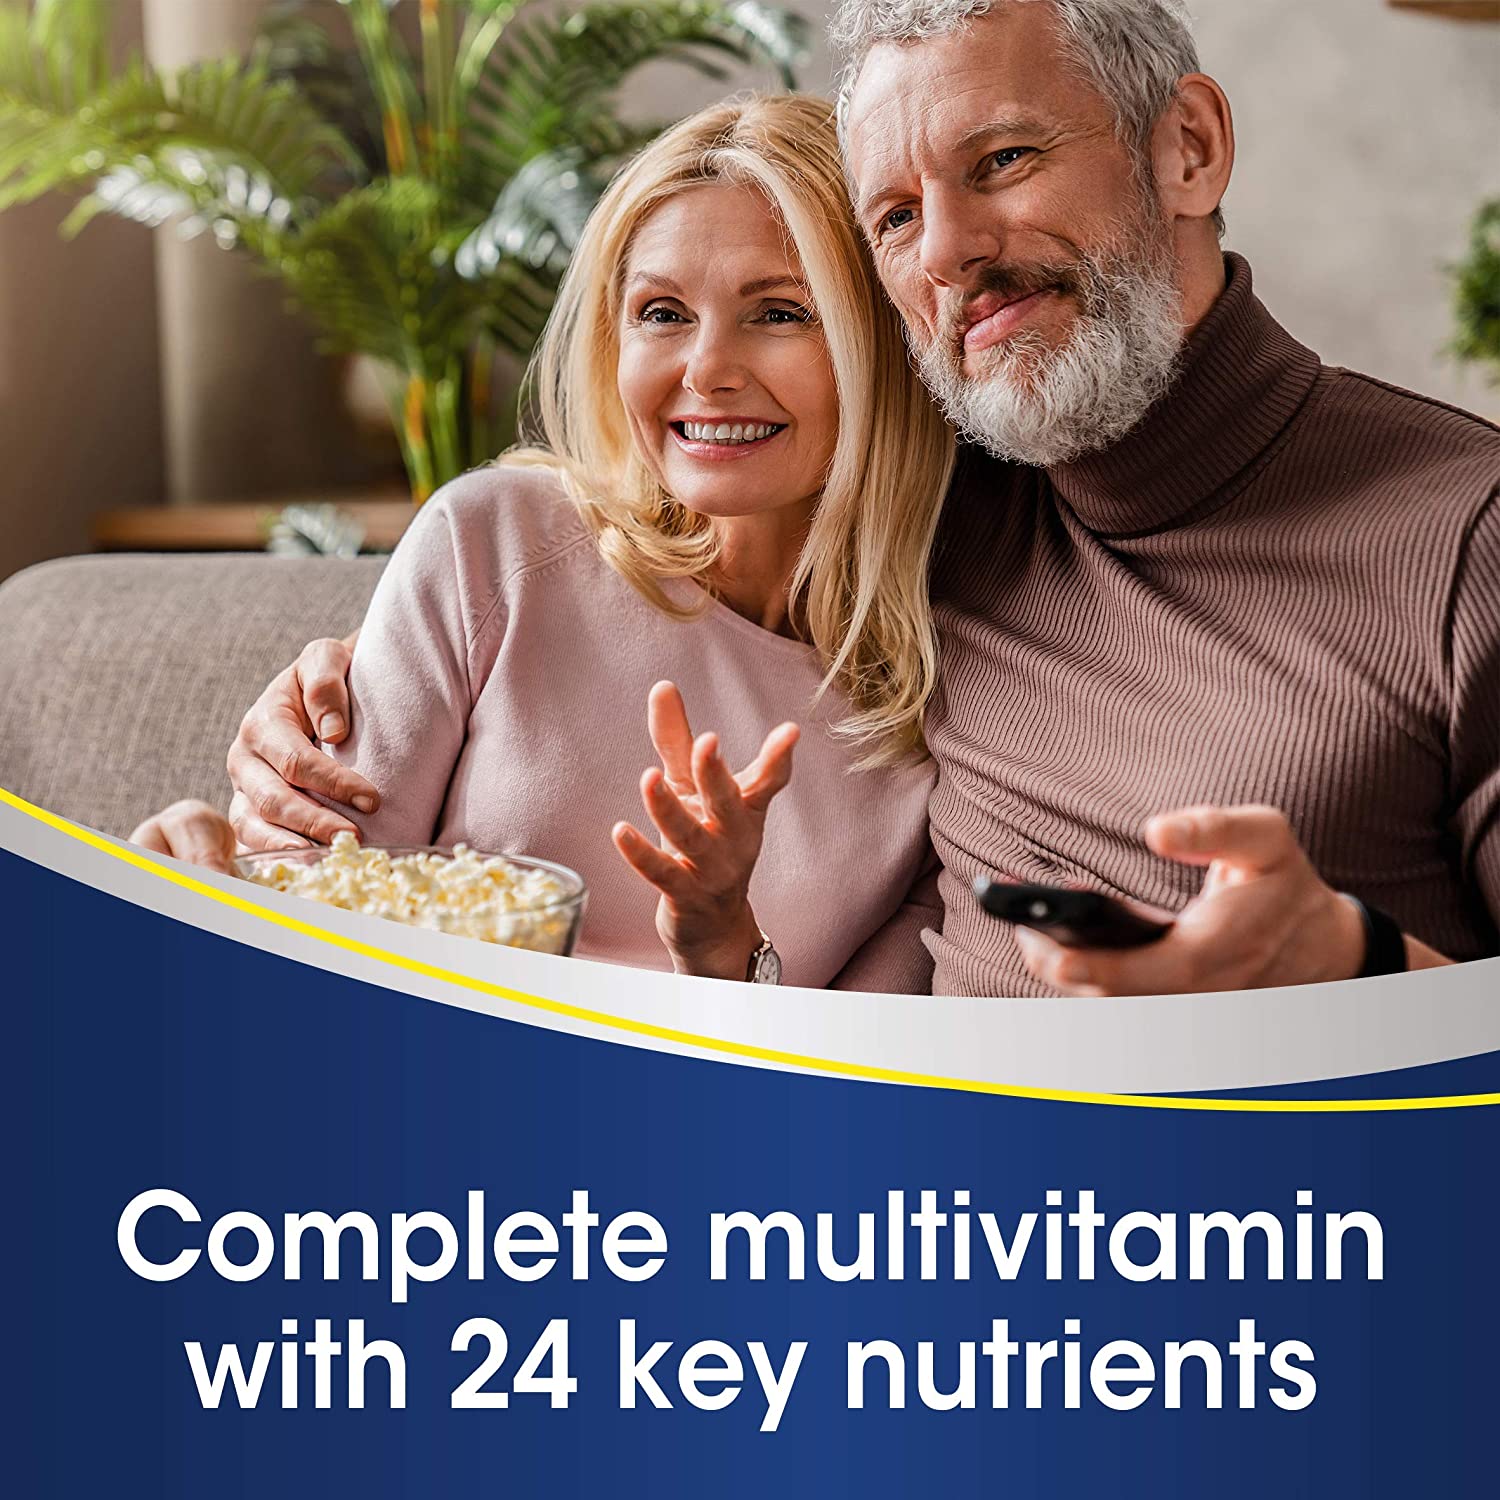 Centrum Advance 50+ | Multivitamin & Minerals | 24 Essential Nutrients Including Vitamin D, Complete Multivitamins | 1x 100 Tablets